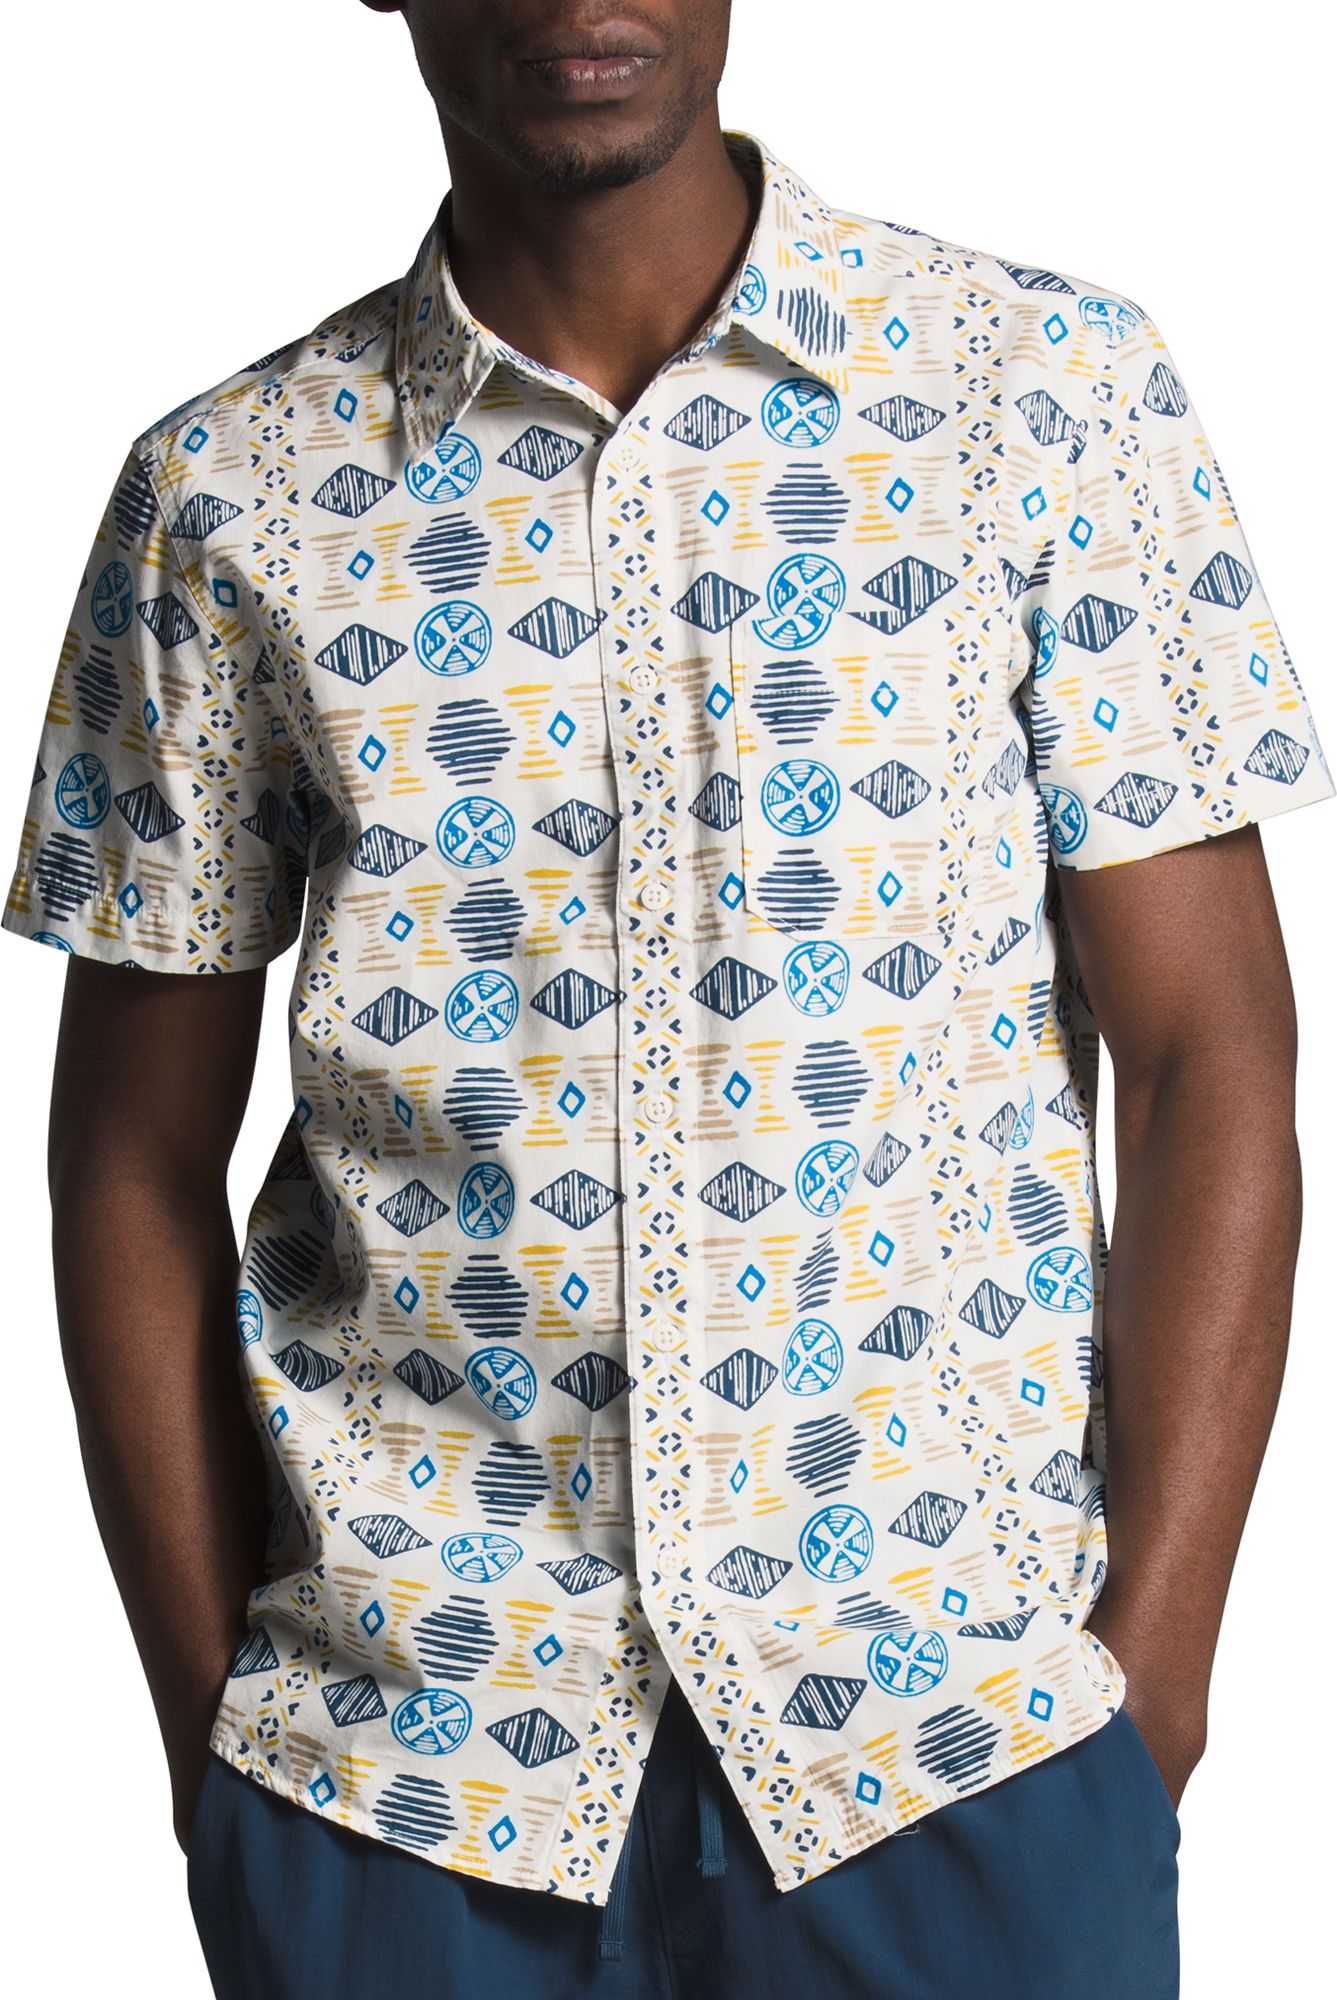 The North Face Men's Pattern Baytrail Jacquard Shirt Sleeve Shirt - .97